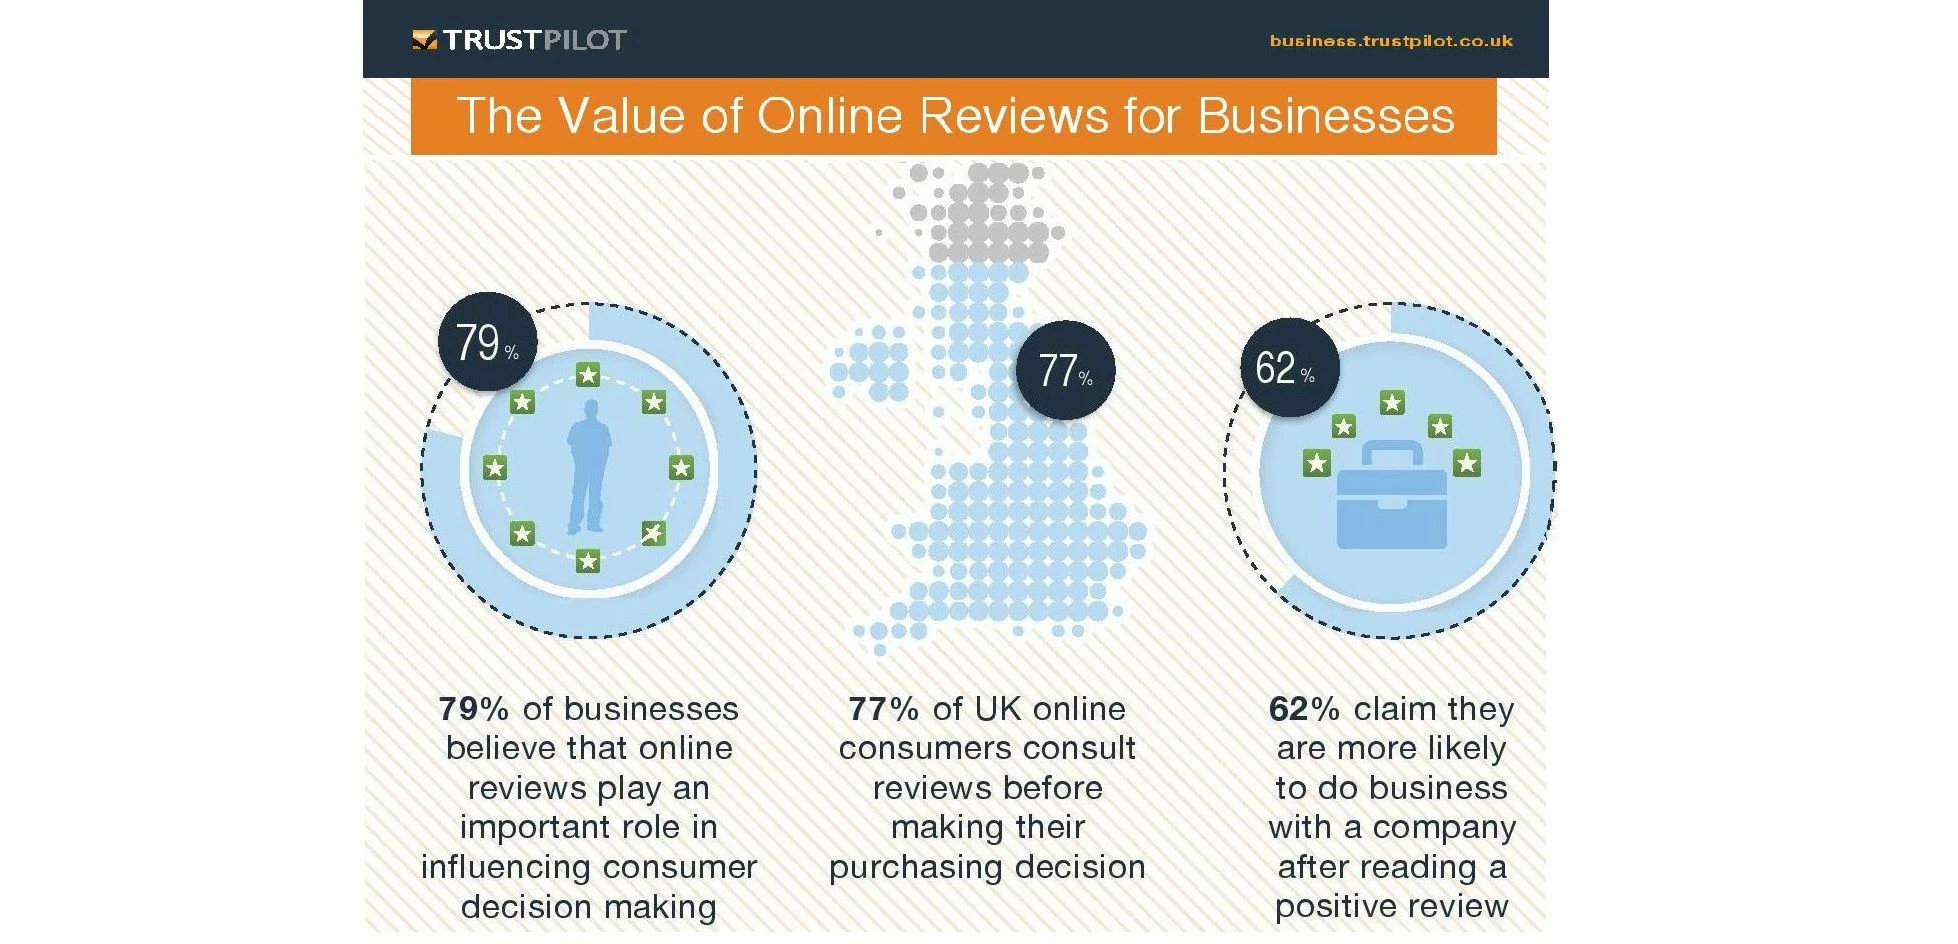 Trustpilot Business Survey Report Infographic